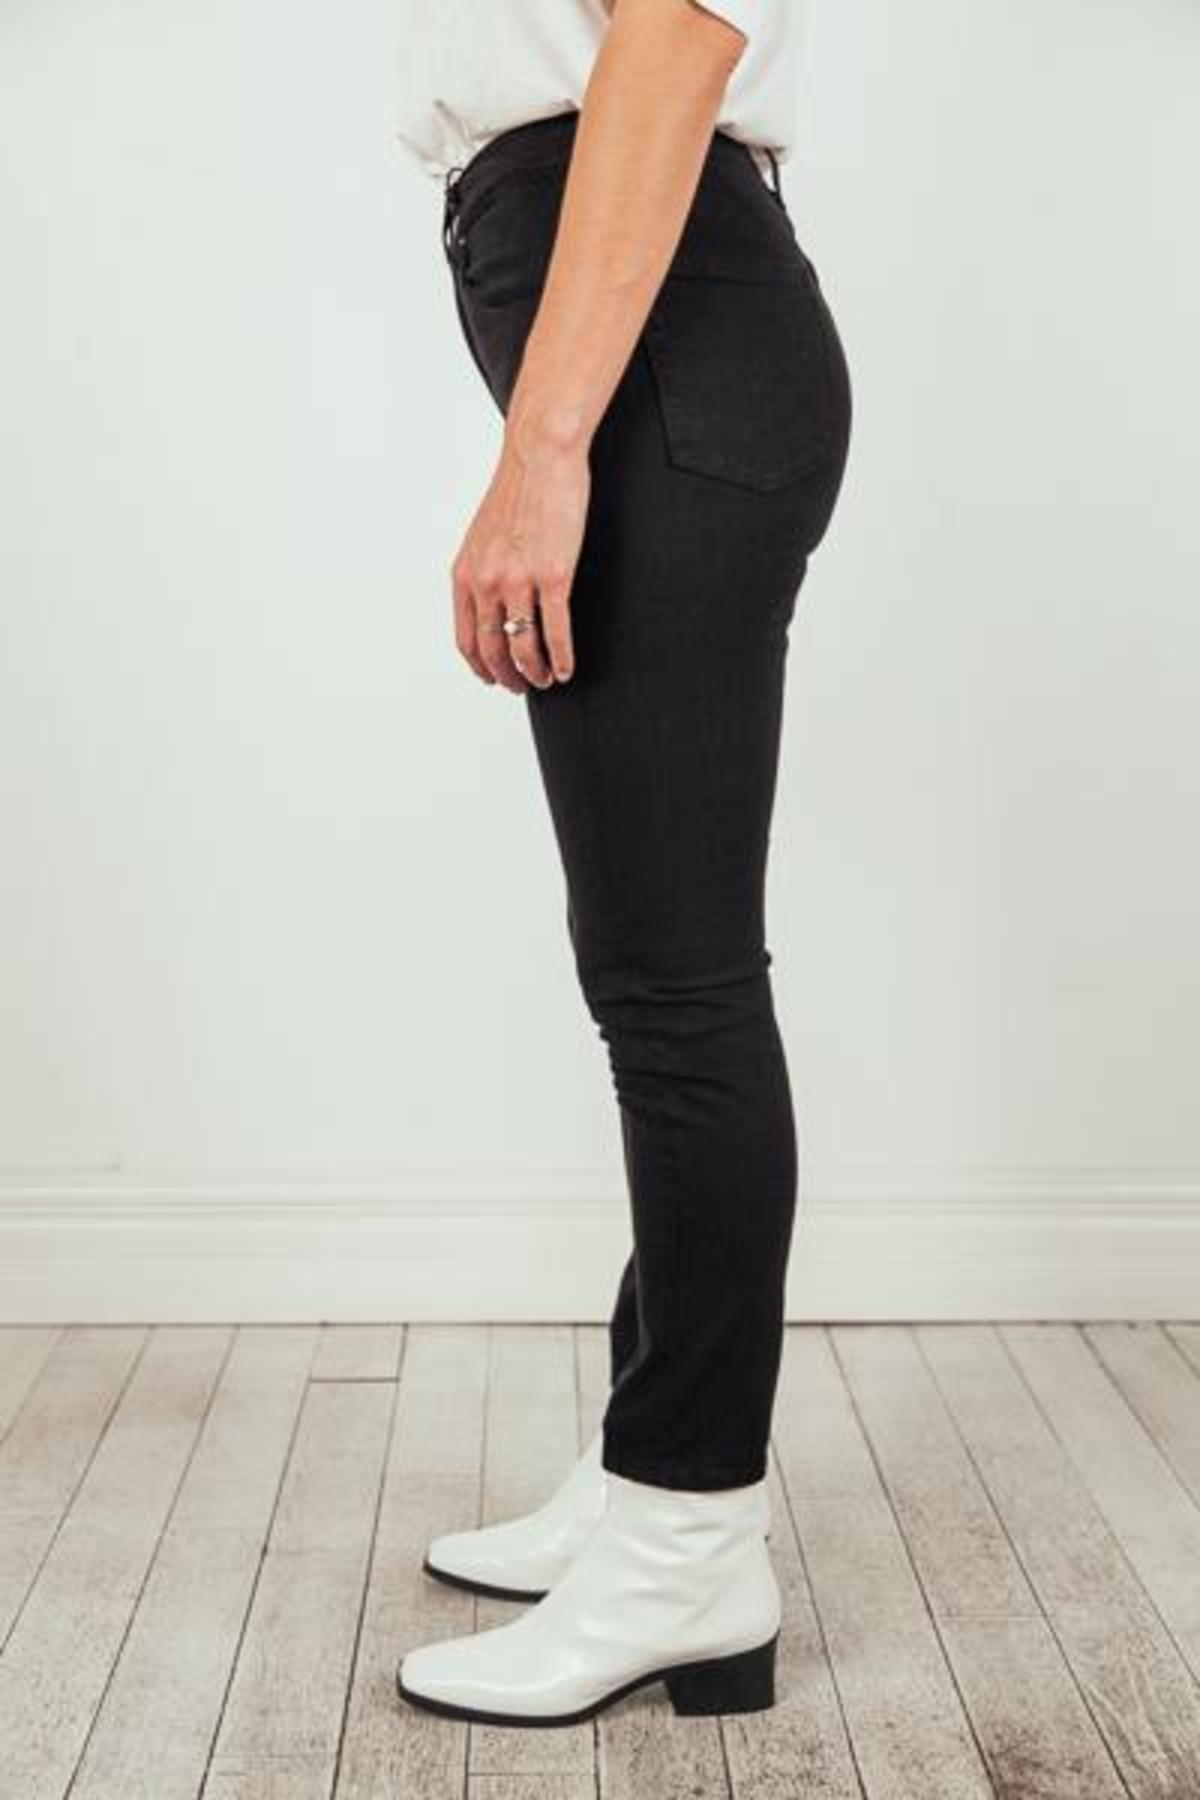 501 Woman's Black Skinny Jeans